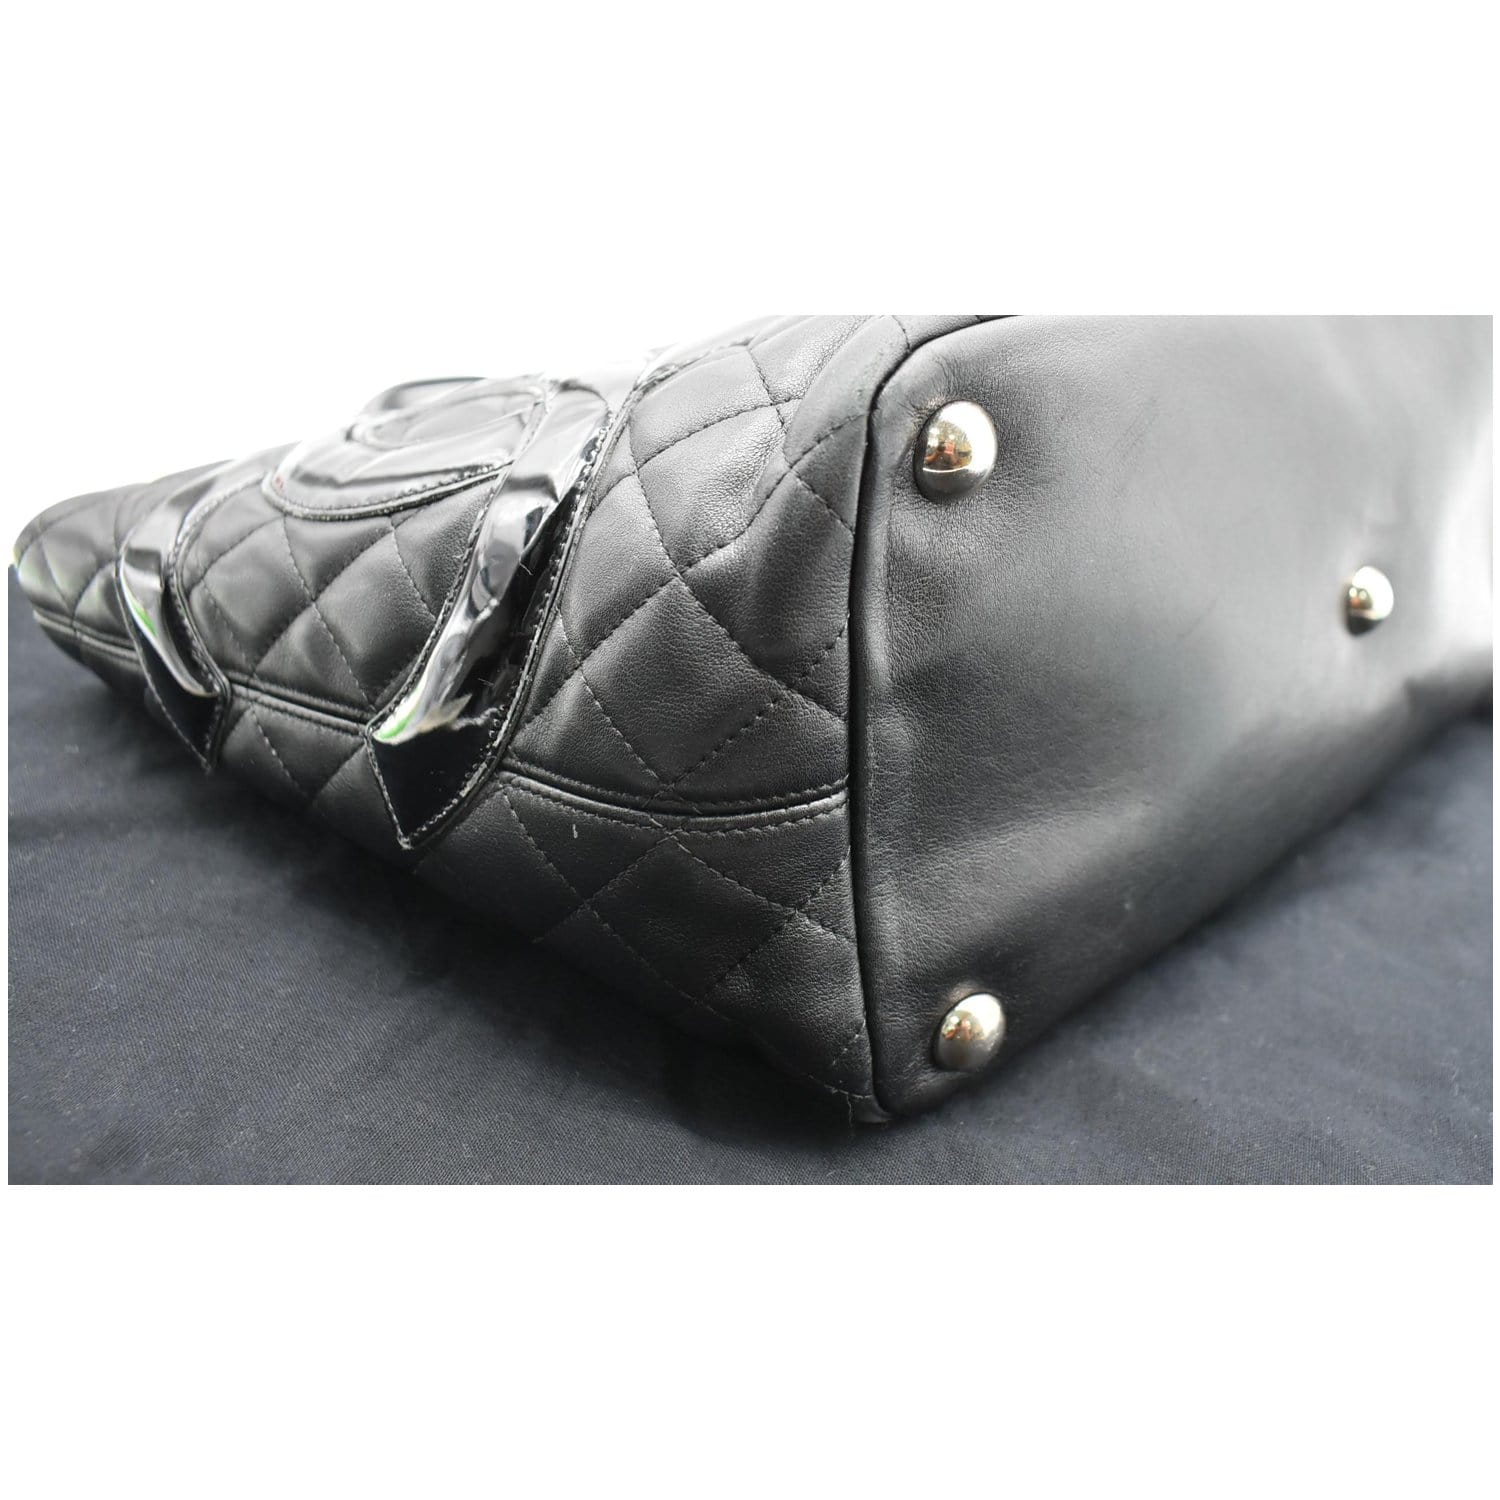 Chanel Tote Cambon Quilted Ligne Large Flap Black Leather Shoulder Bag -  MyDesignerly